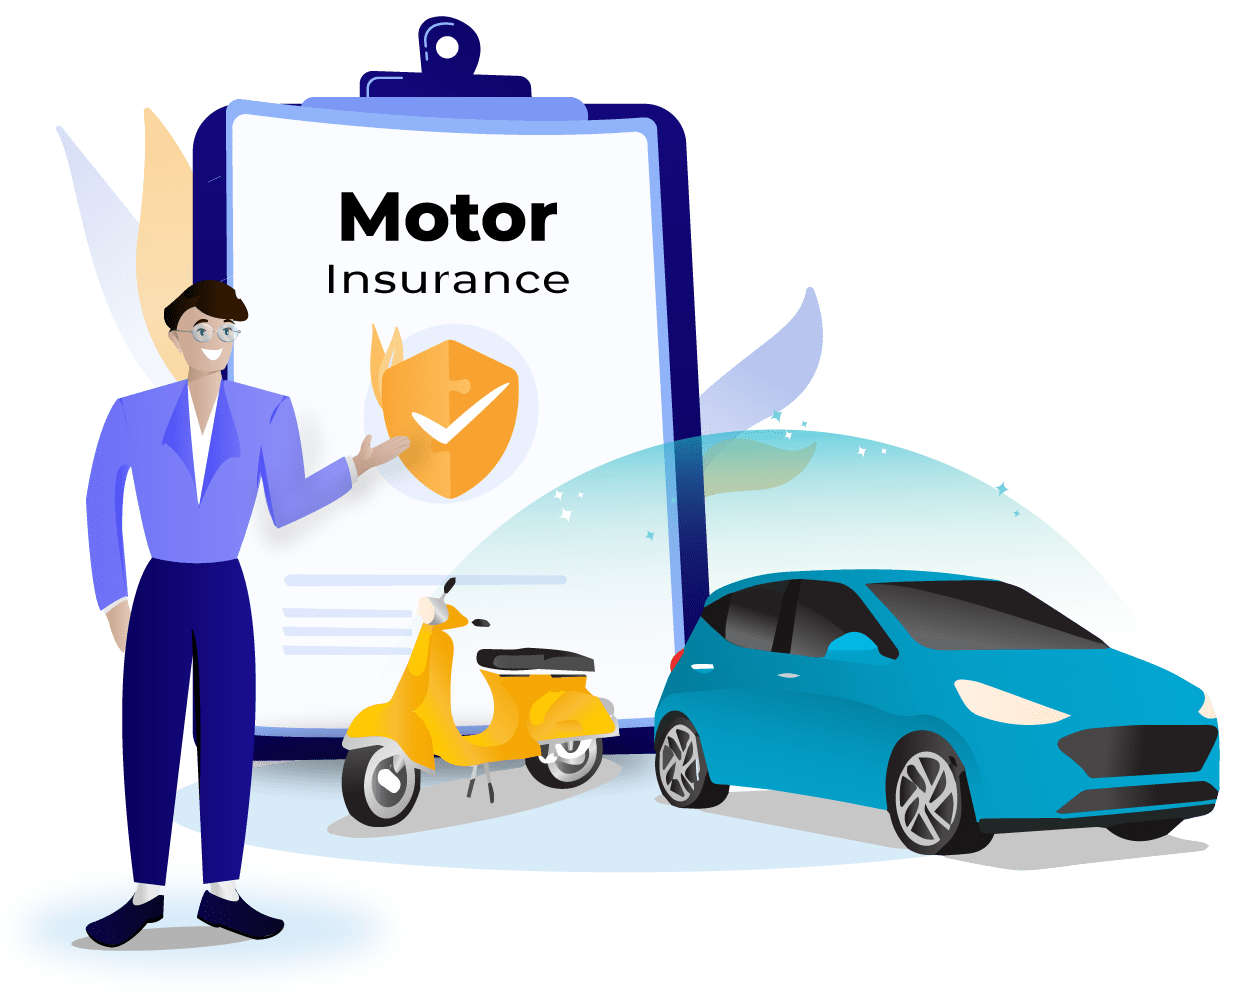 Takaful Ikhlas Motor Insurance 